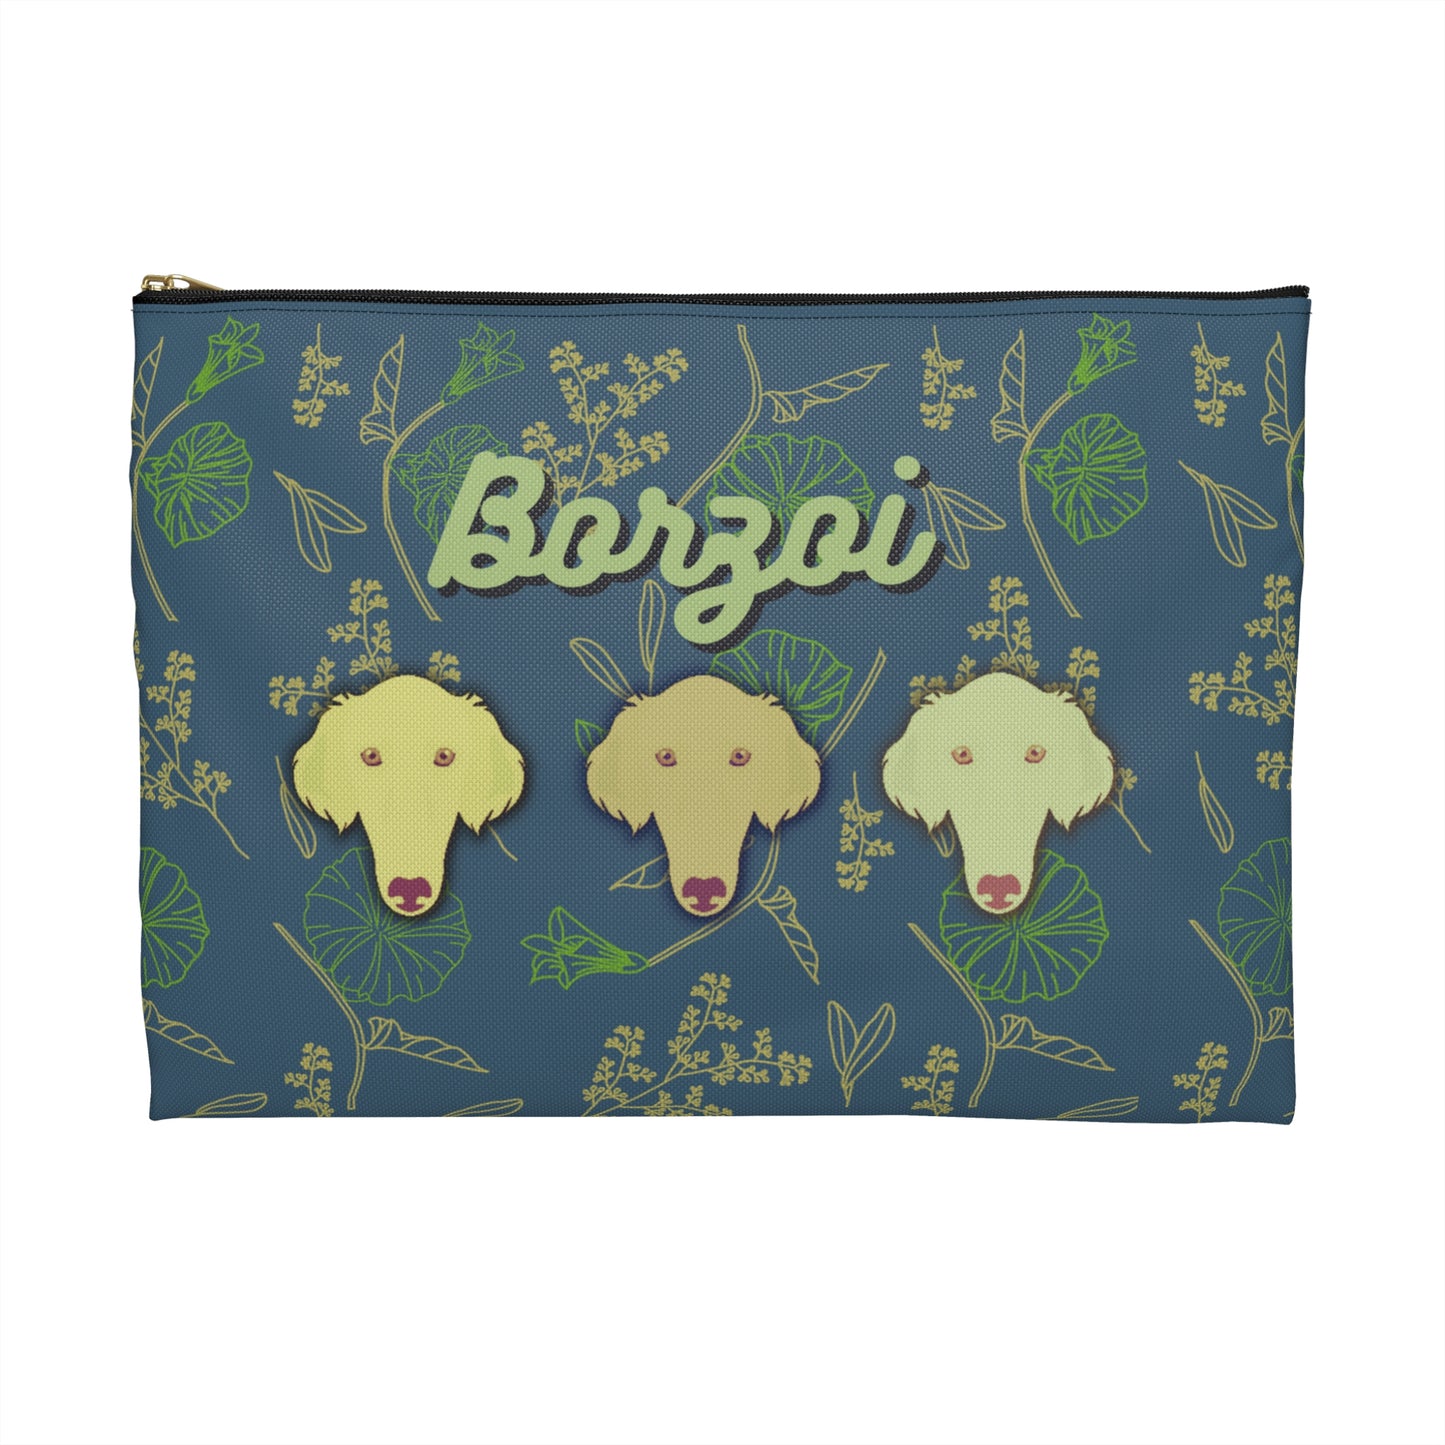 Borzoi Accessory Pouch, Sighthound Bag